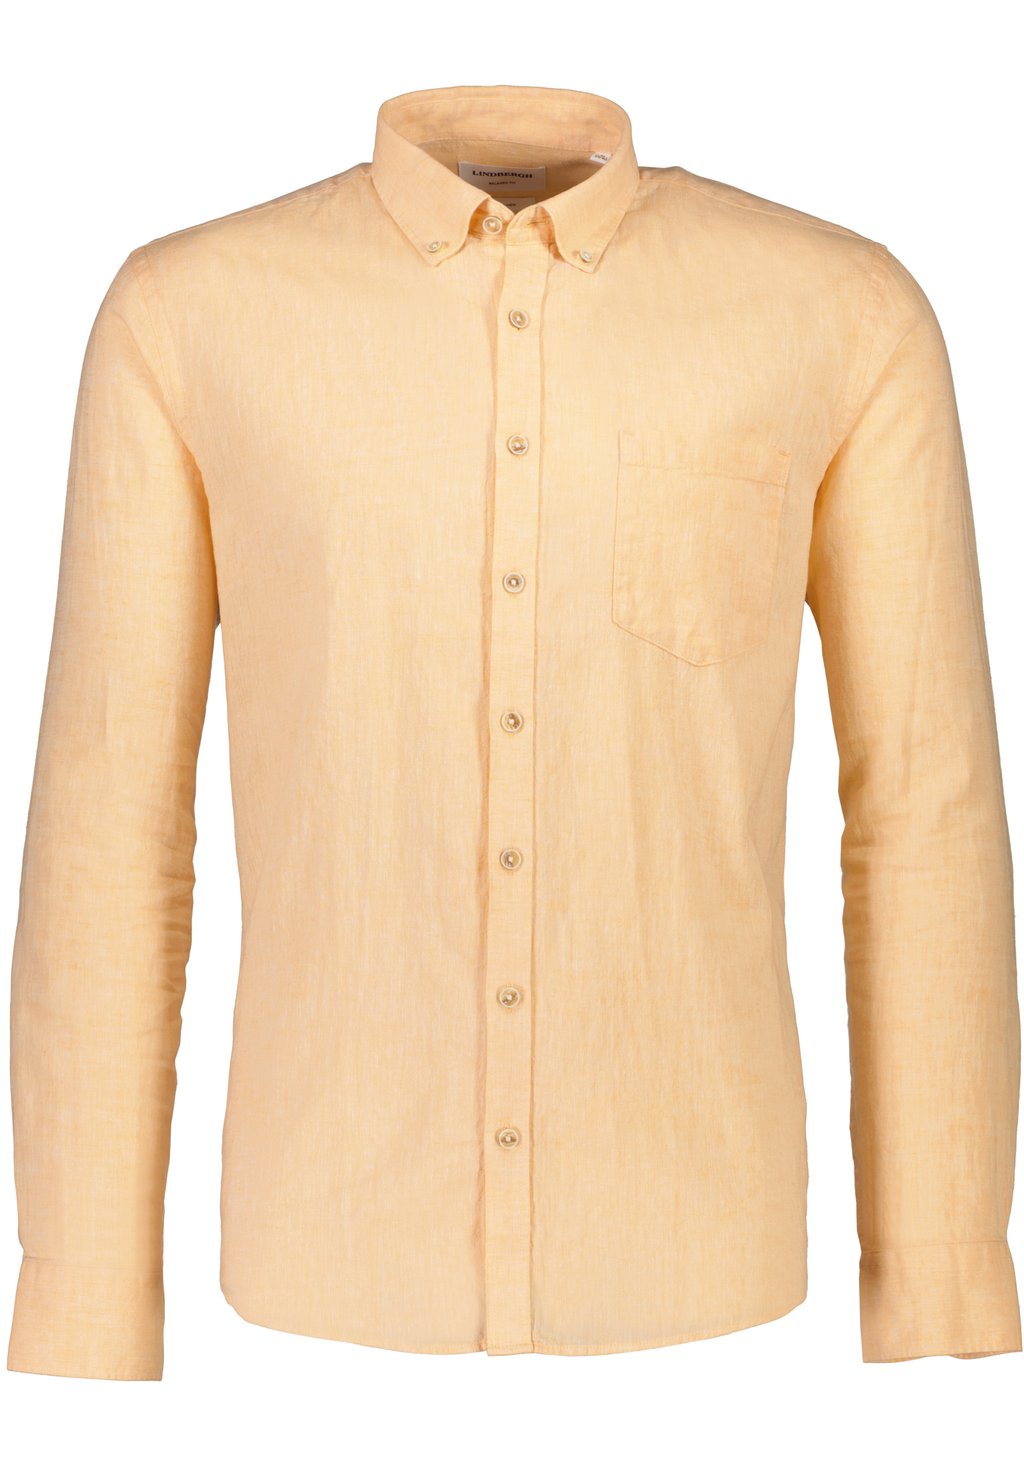 Рубашка Lindbergh, персиковая пижама женская valmay рубашка бриджи персиковая принт перья vm1164